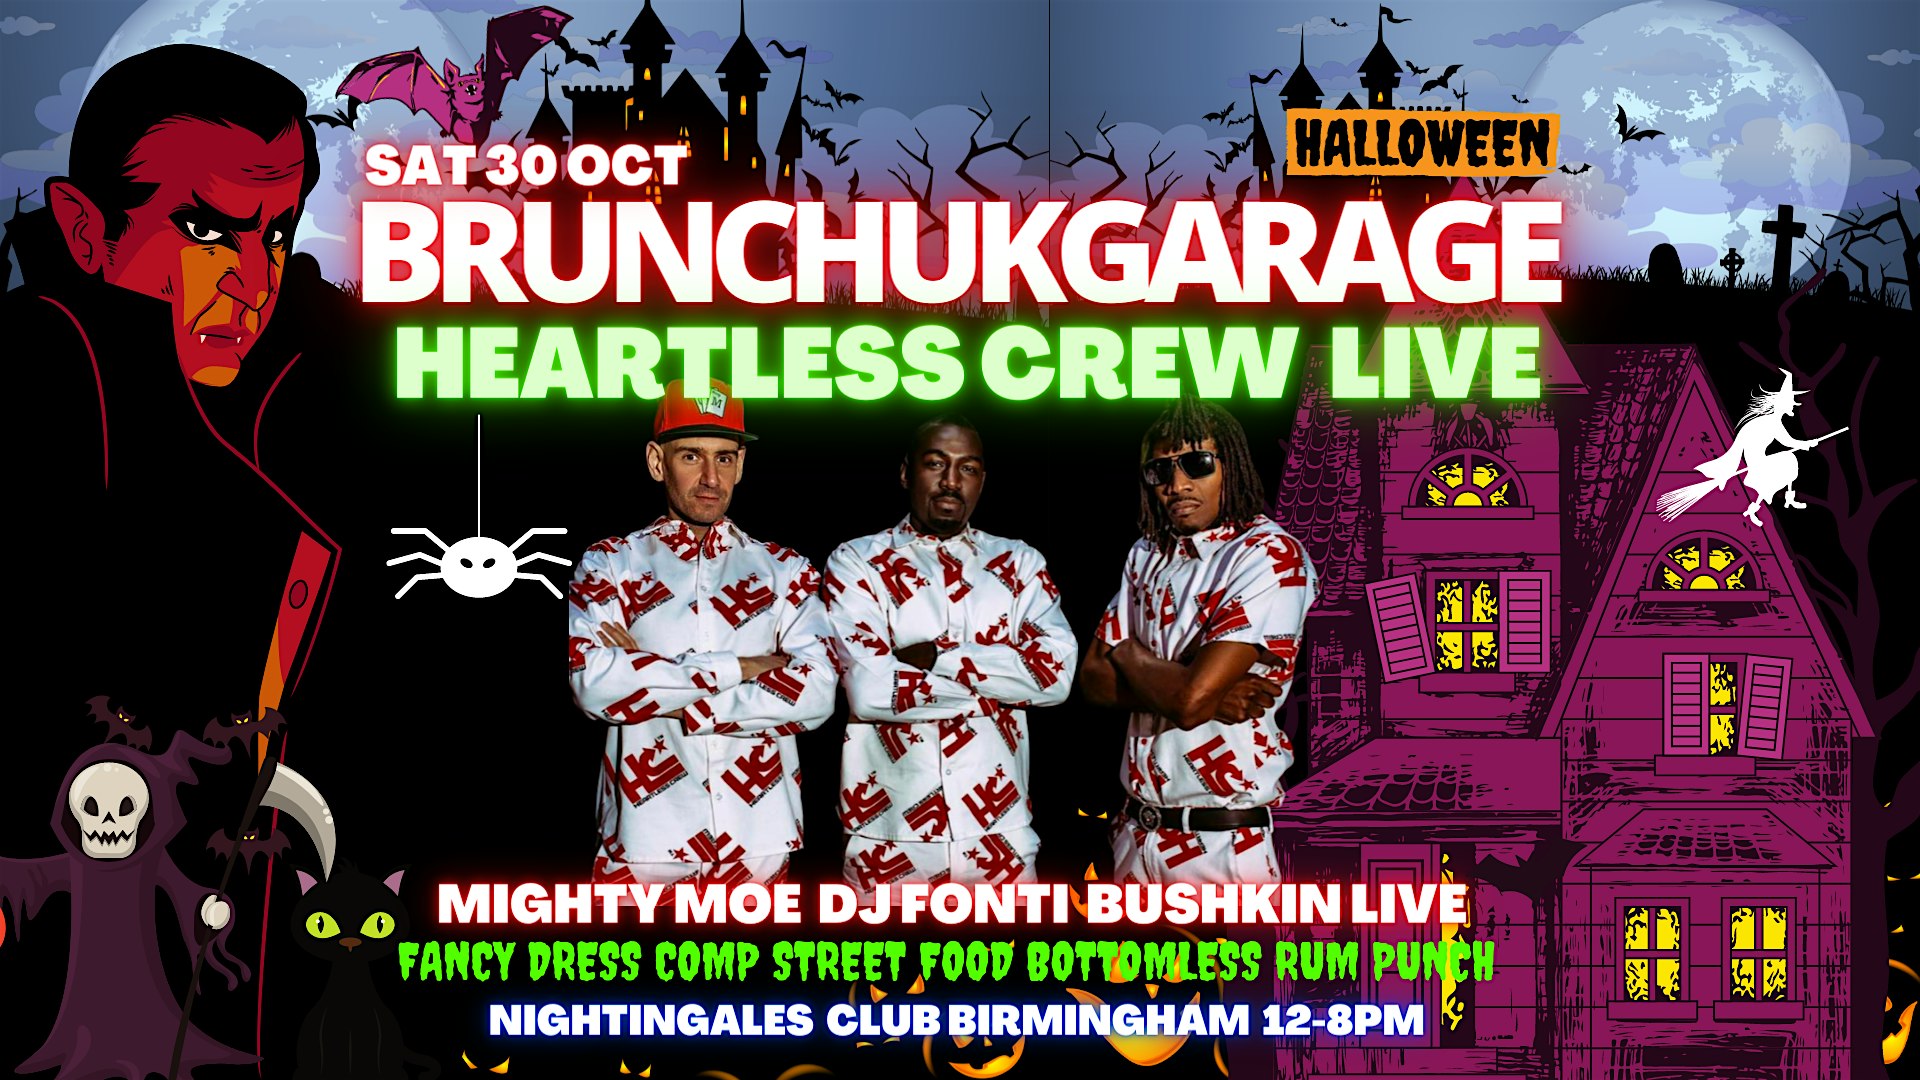 Brunch Uk Garage Bham Heartless Crew Live Nightingale Club Birmingham October 23 2021 Allevents In